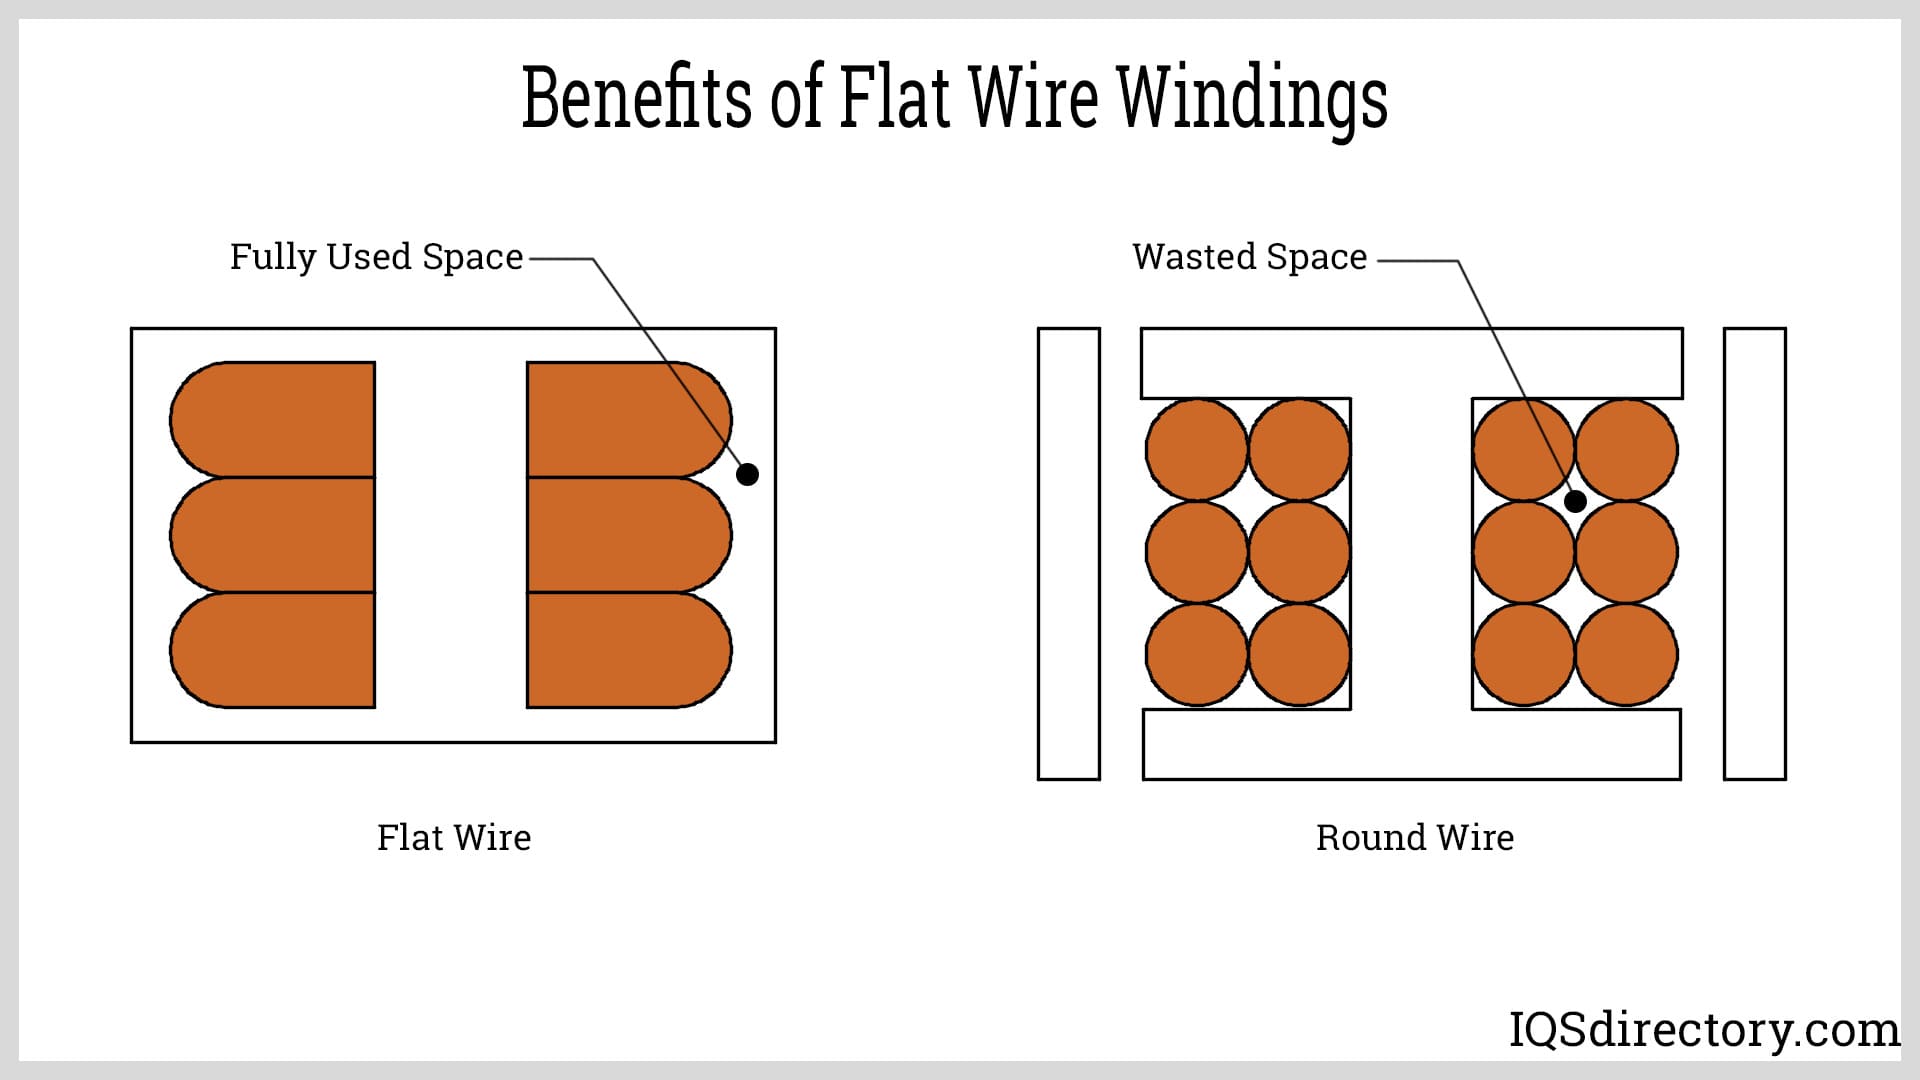 Benefits of Flat Wire Windings